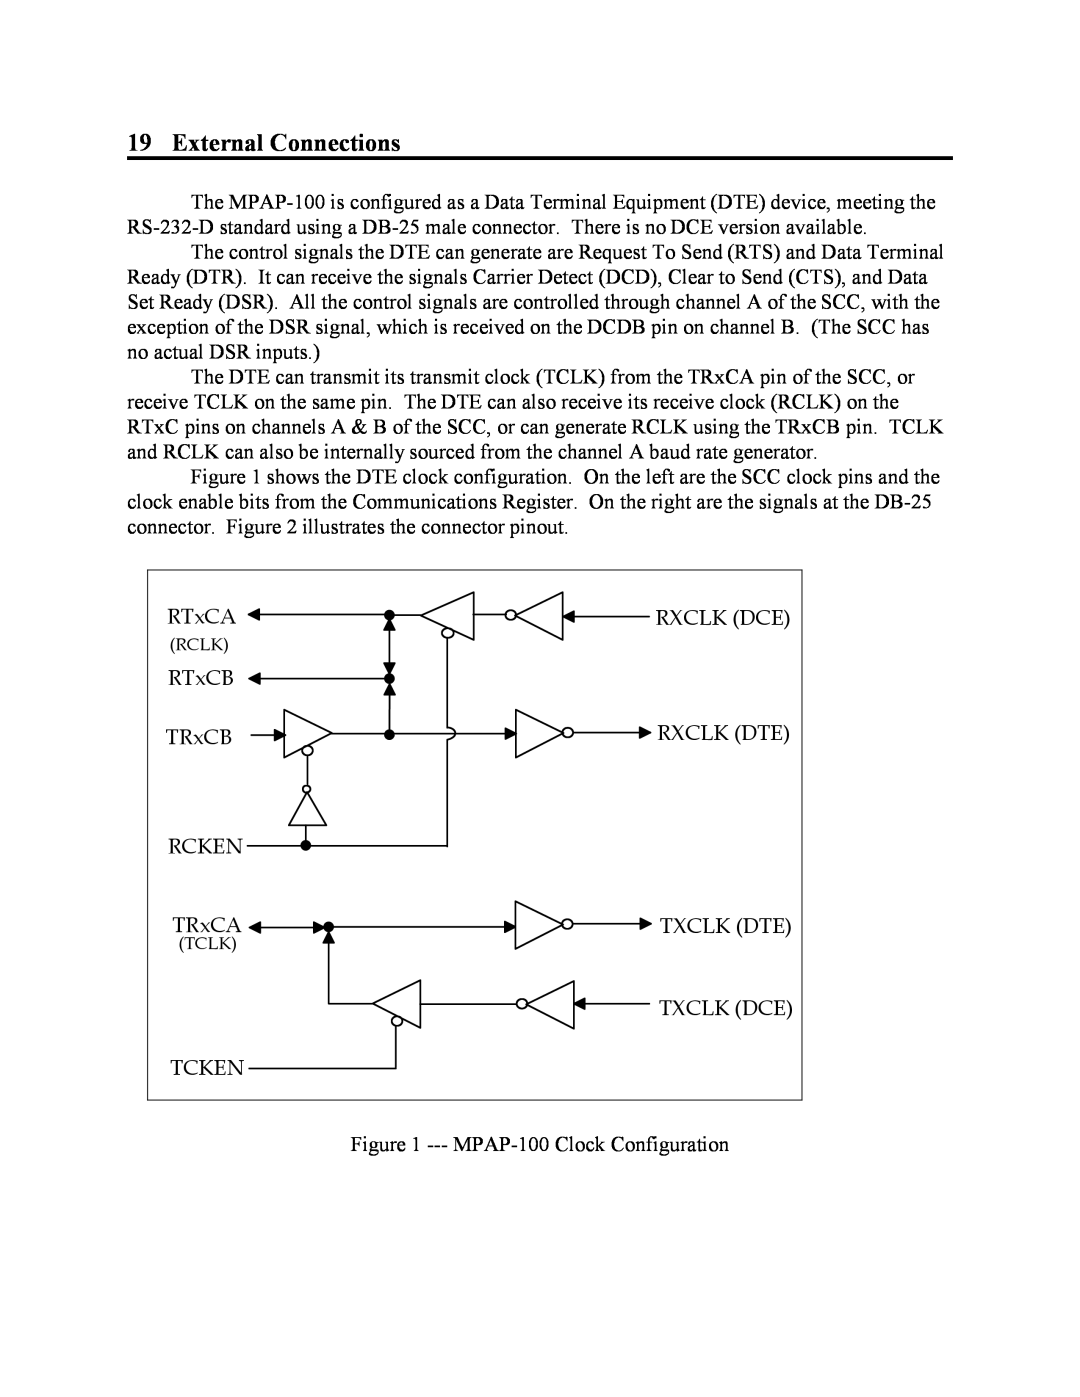 Quatech MPAP-100 user manual External Connections 